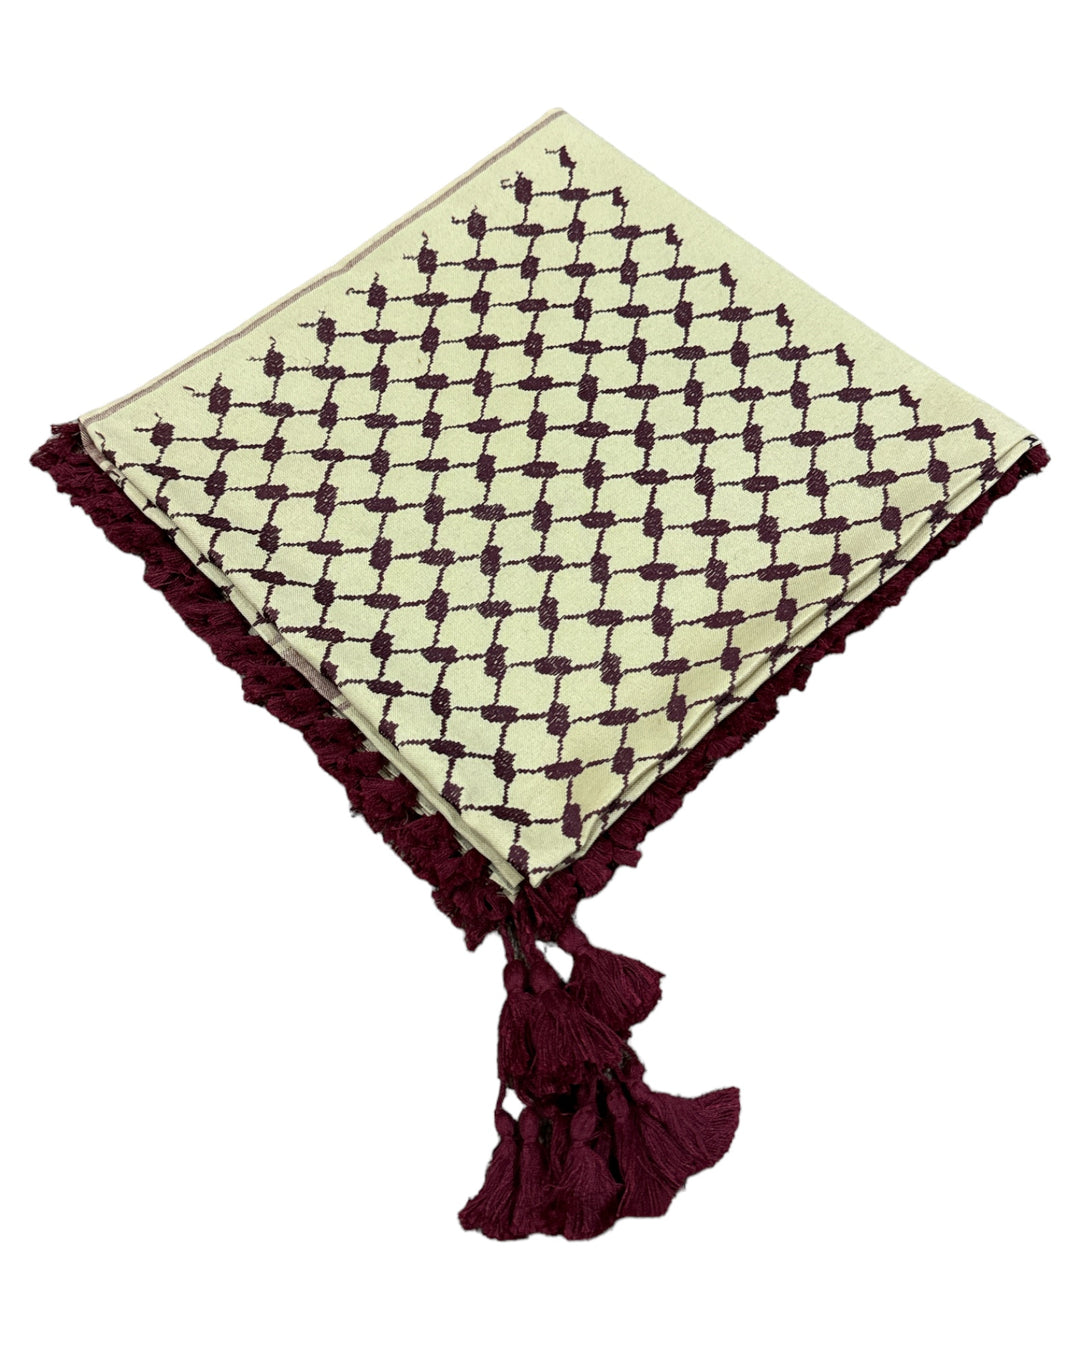 Palestine's Symbolic Shami Tan Brown & Maroon Pattern Design with Braids Zuhd Shemag 22